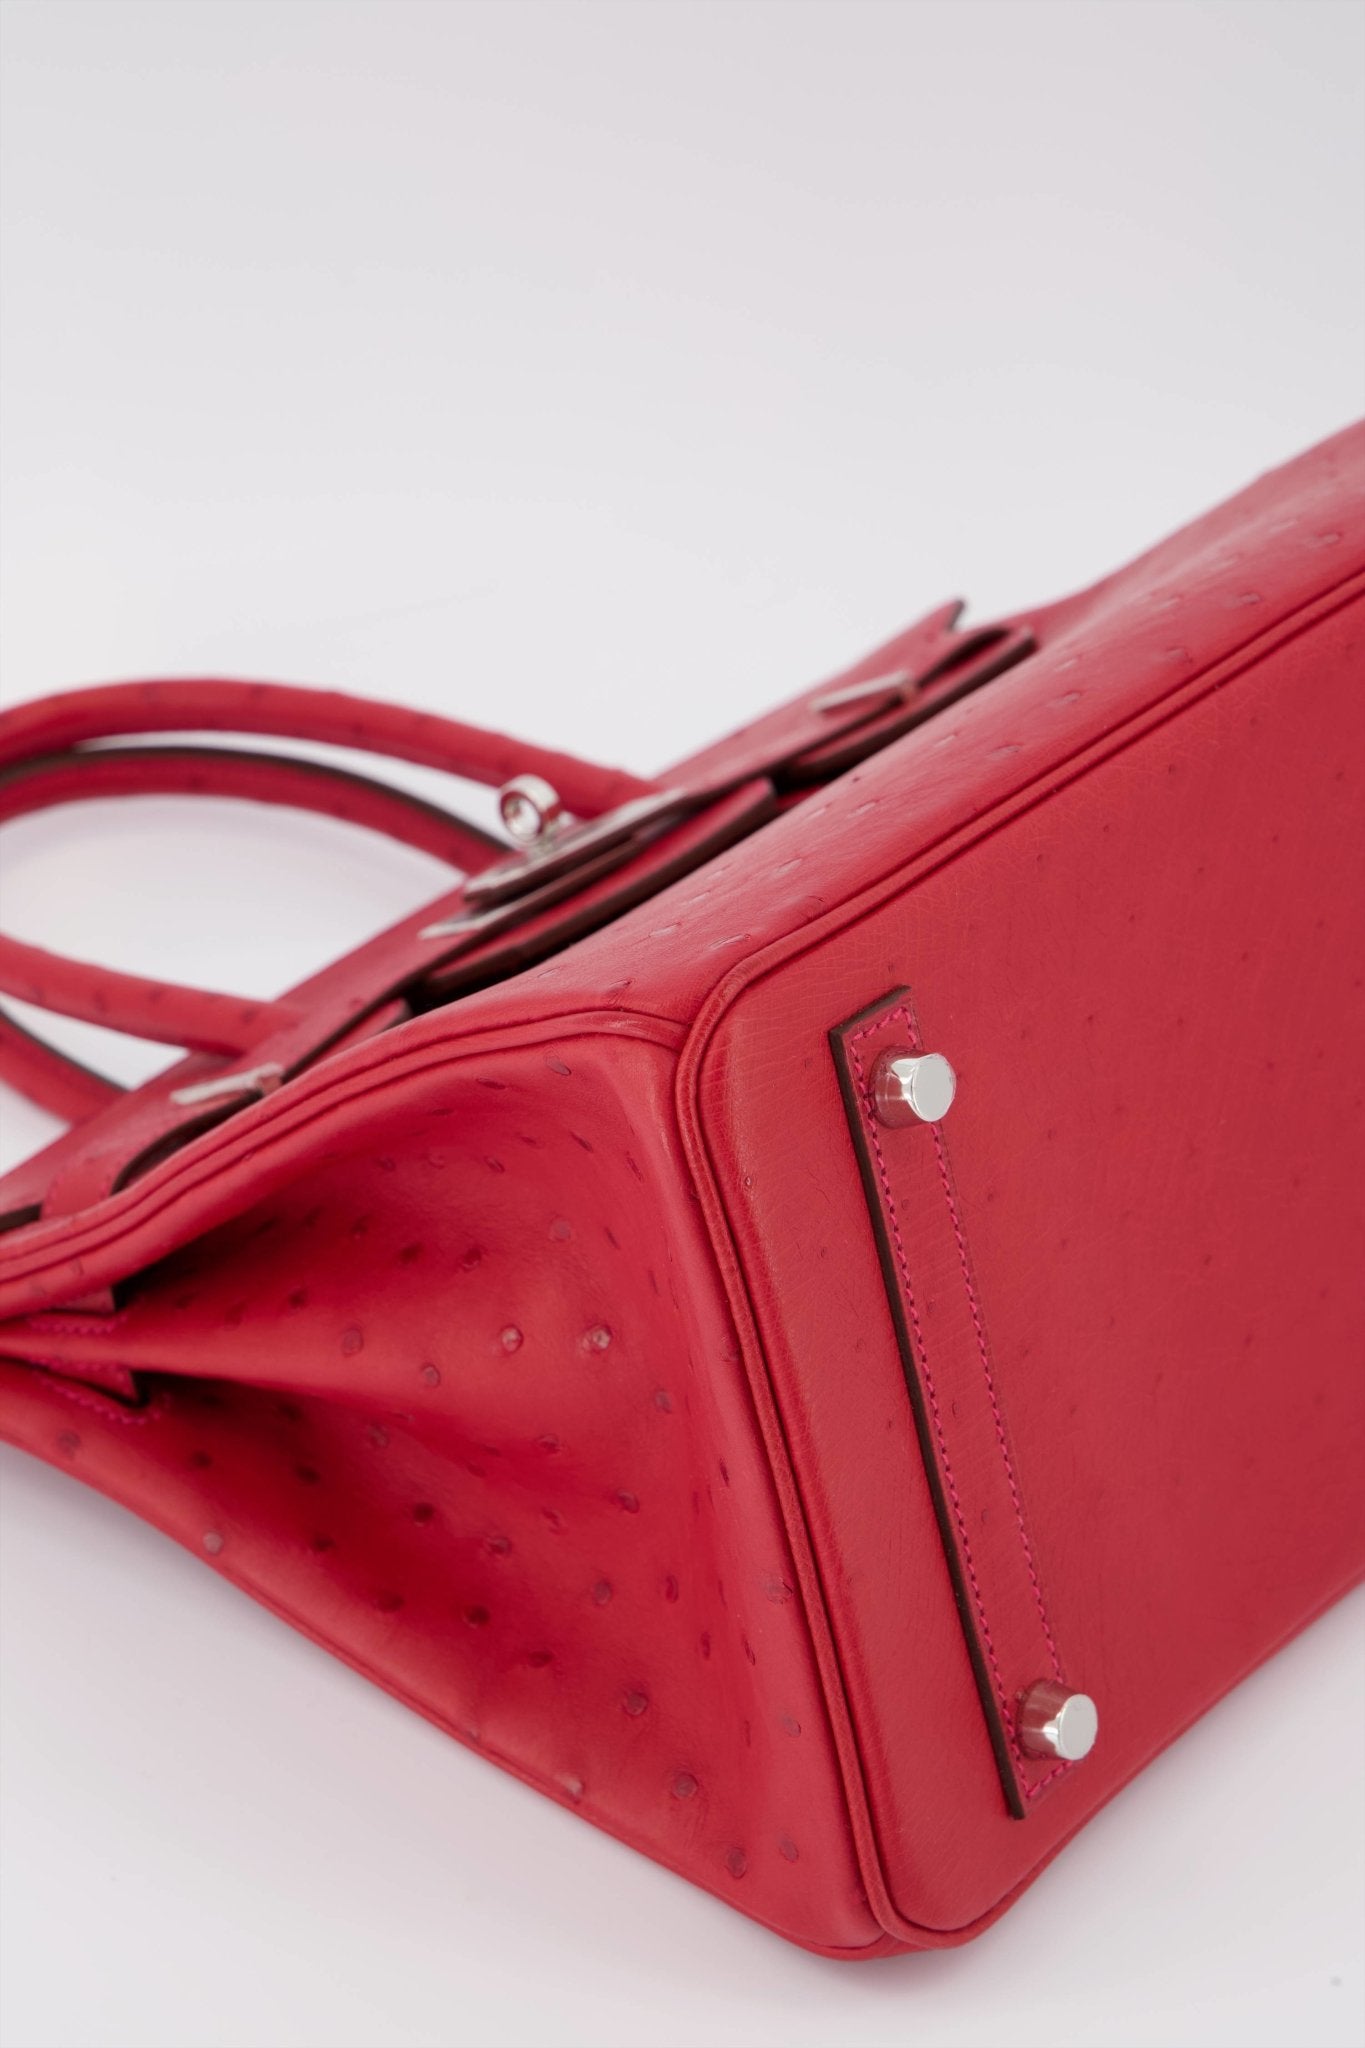 Hermes Birkin 30 Handbag Rouge Vif